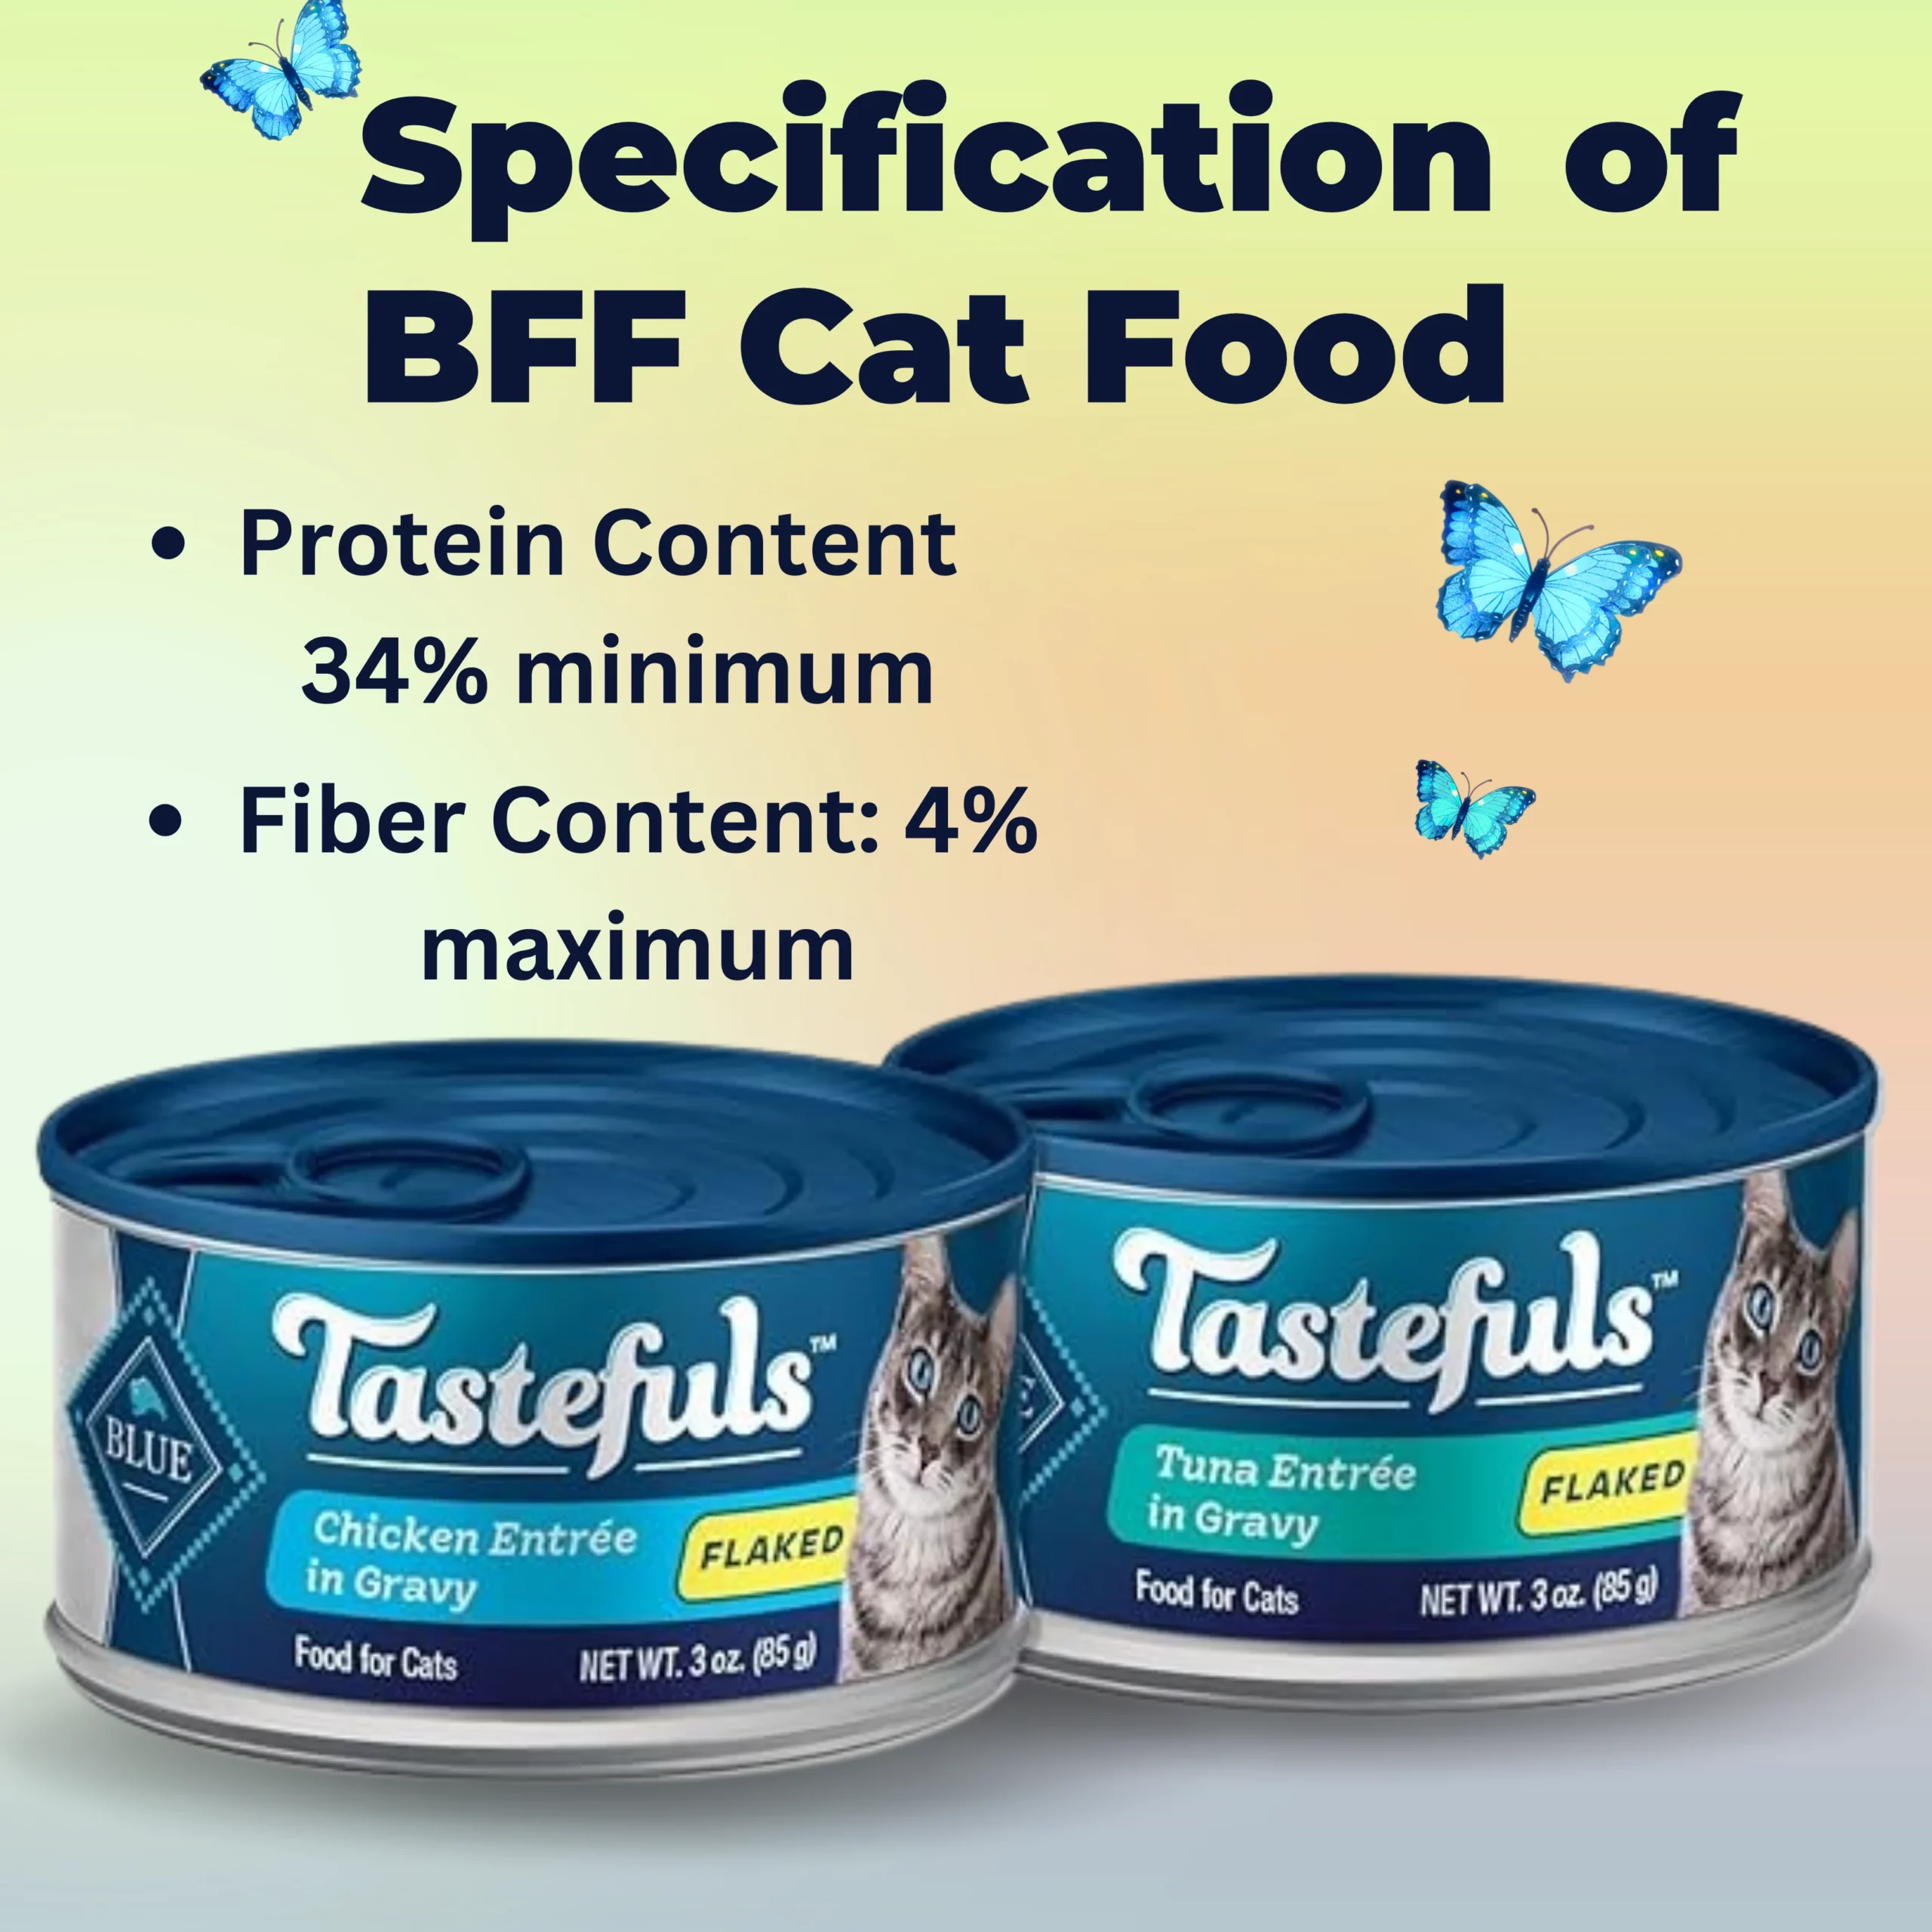 BFF Cat Food